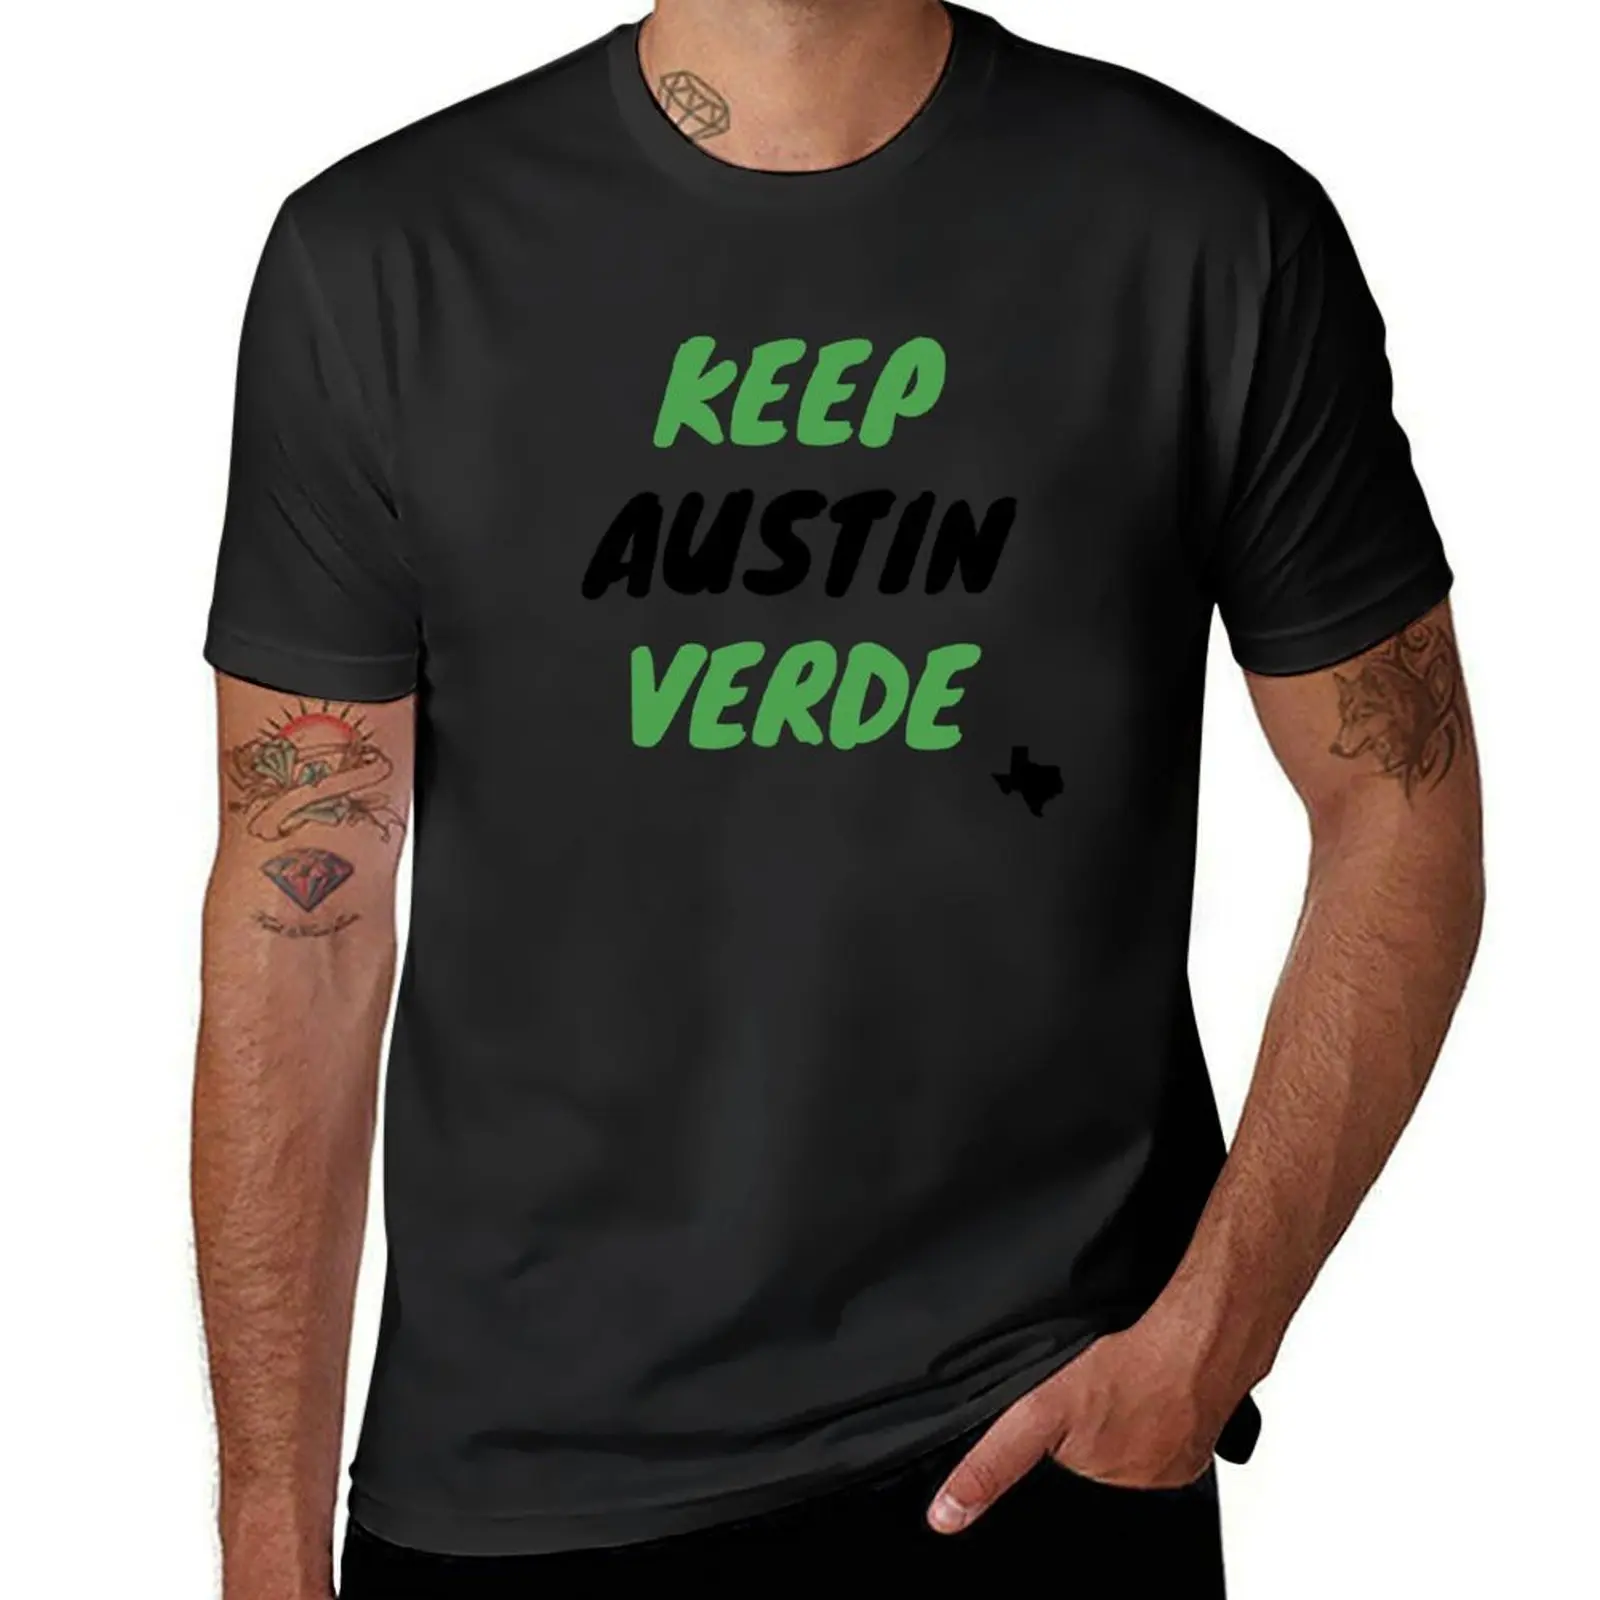 

Keep Austin Verde - Austin Soccer T-Shirt plain graphics quick drying Men's t-shirt